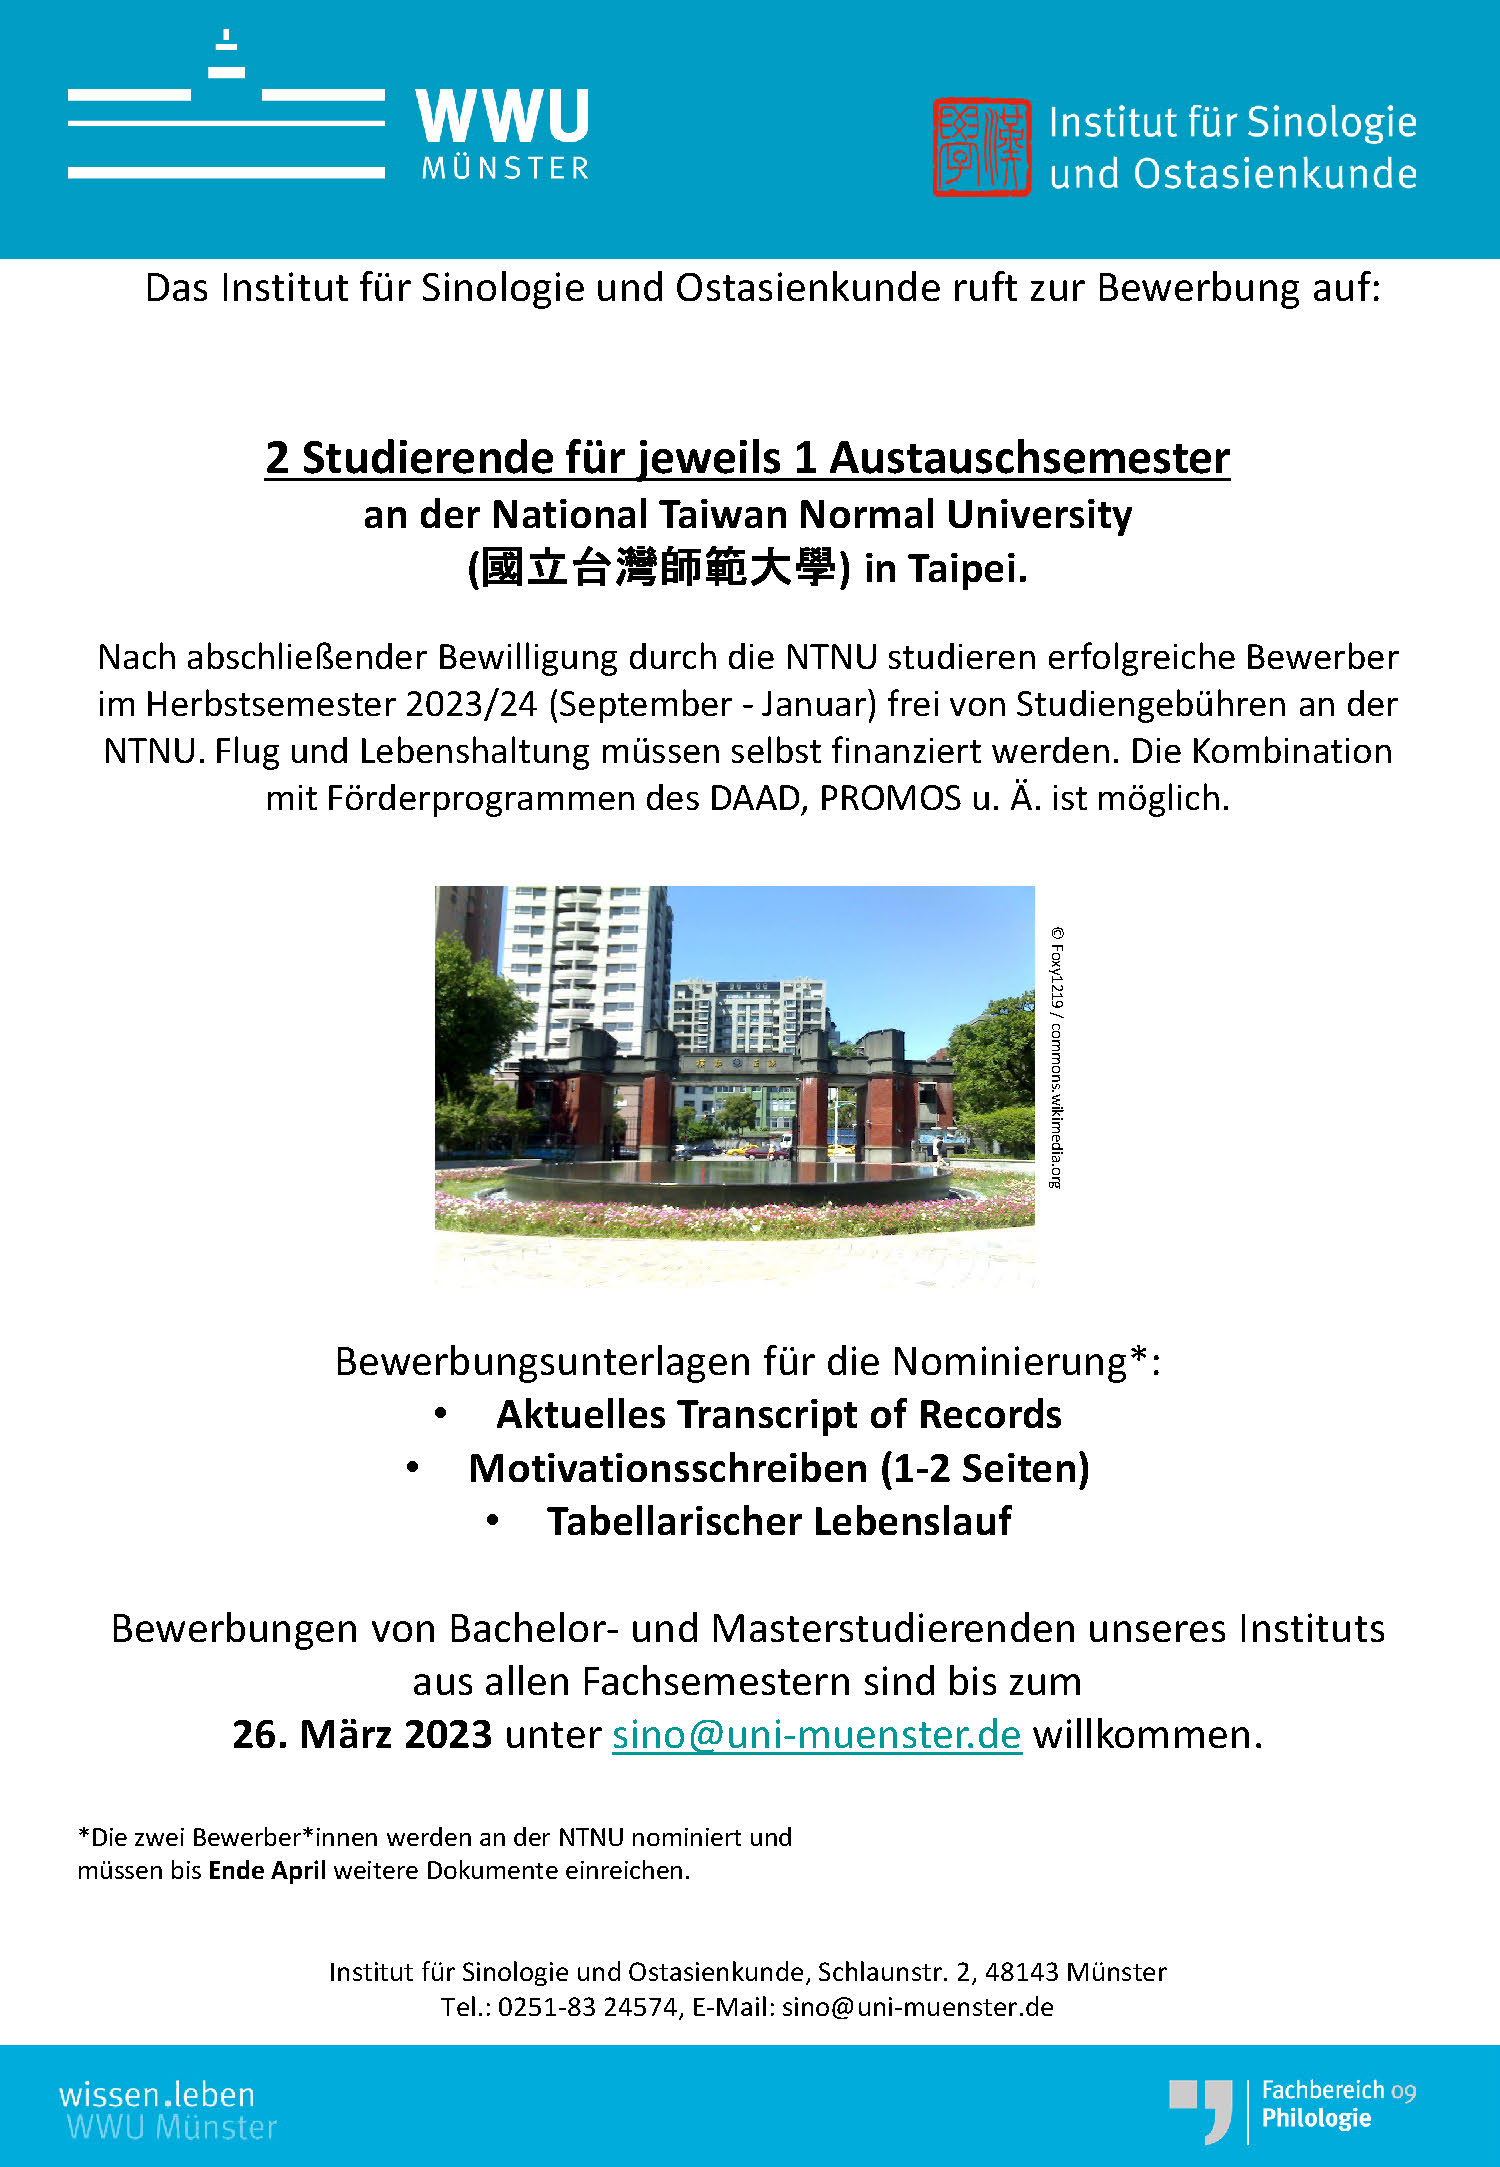 Ankündigung Bewerbung für Herbstsemester 2022/23 an der NTNU in Taiwan